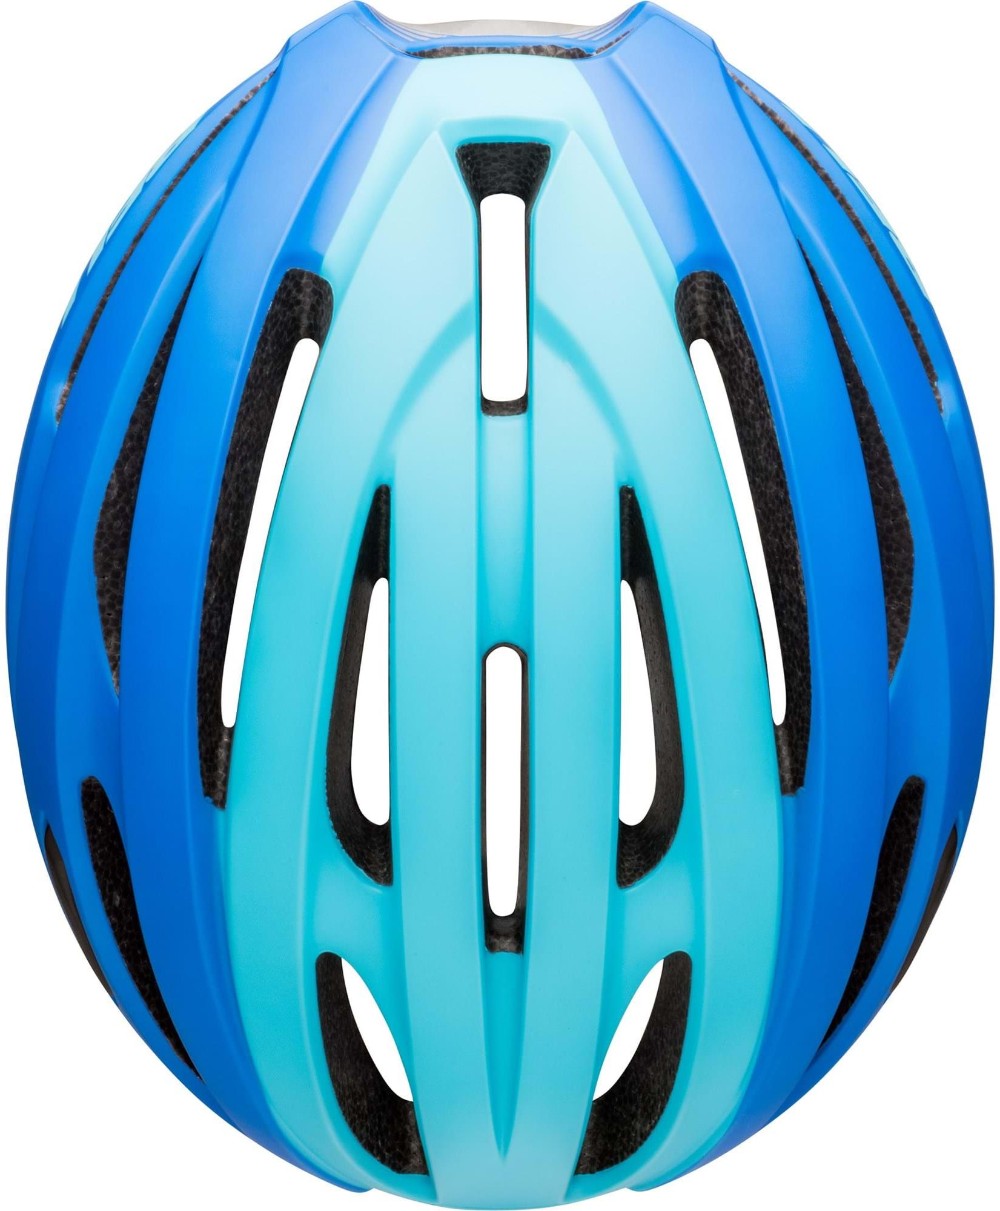 Avenue Road Helmet image 2